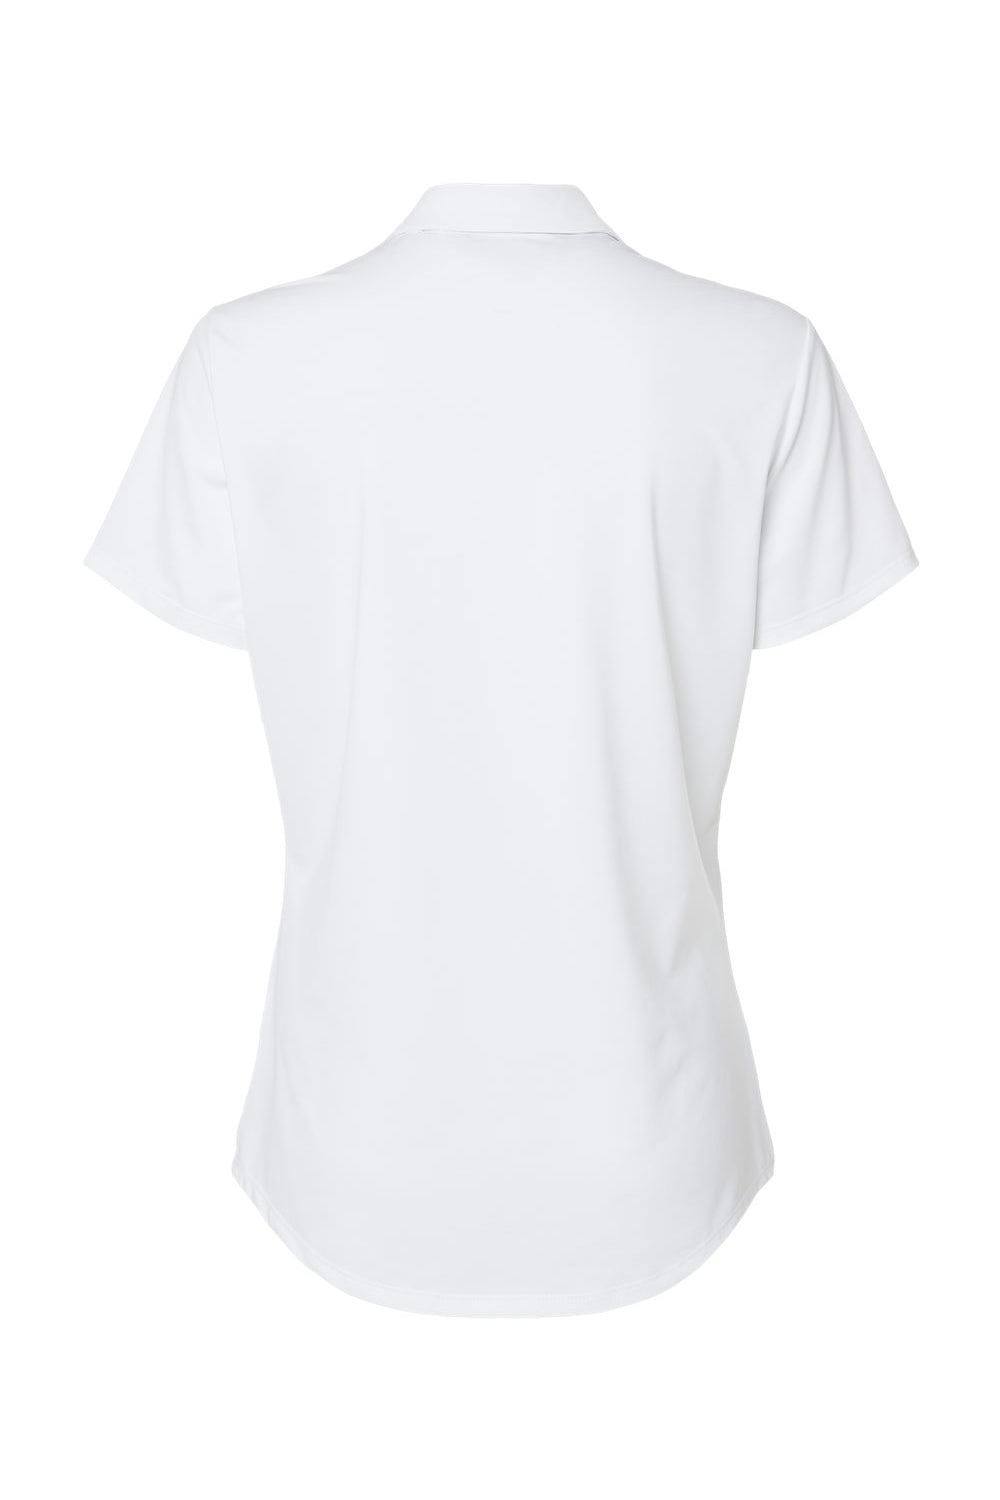 Adidas A515 Womens Ultimate Short Sleeve Polo Shirt White Flat Back